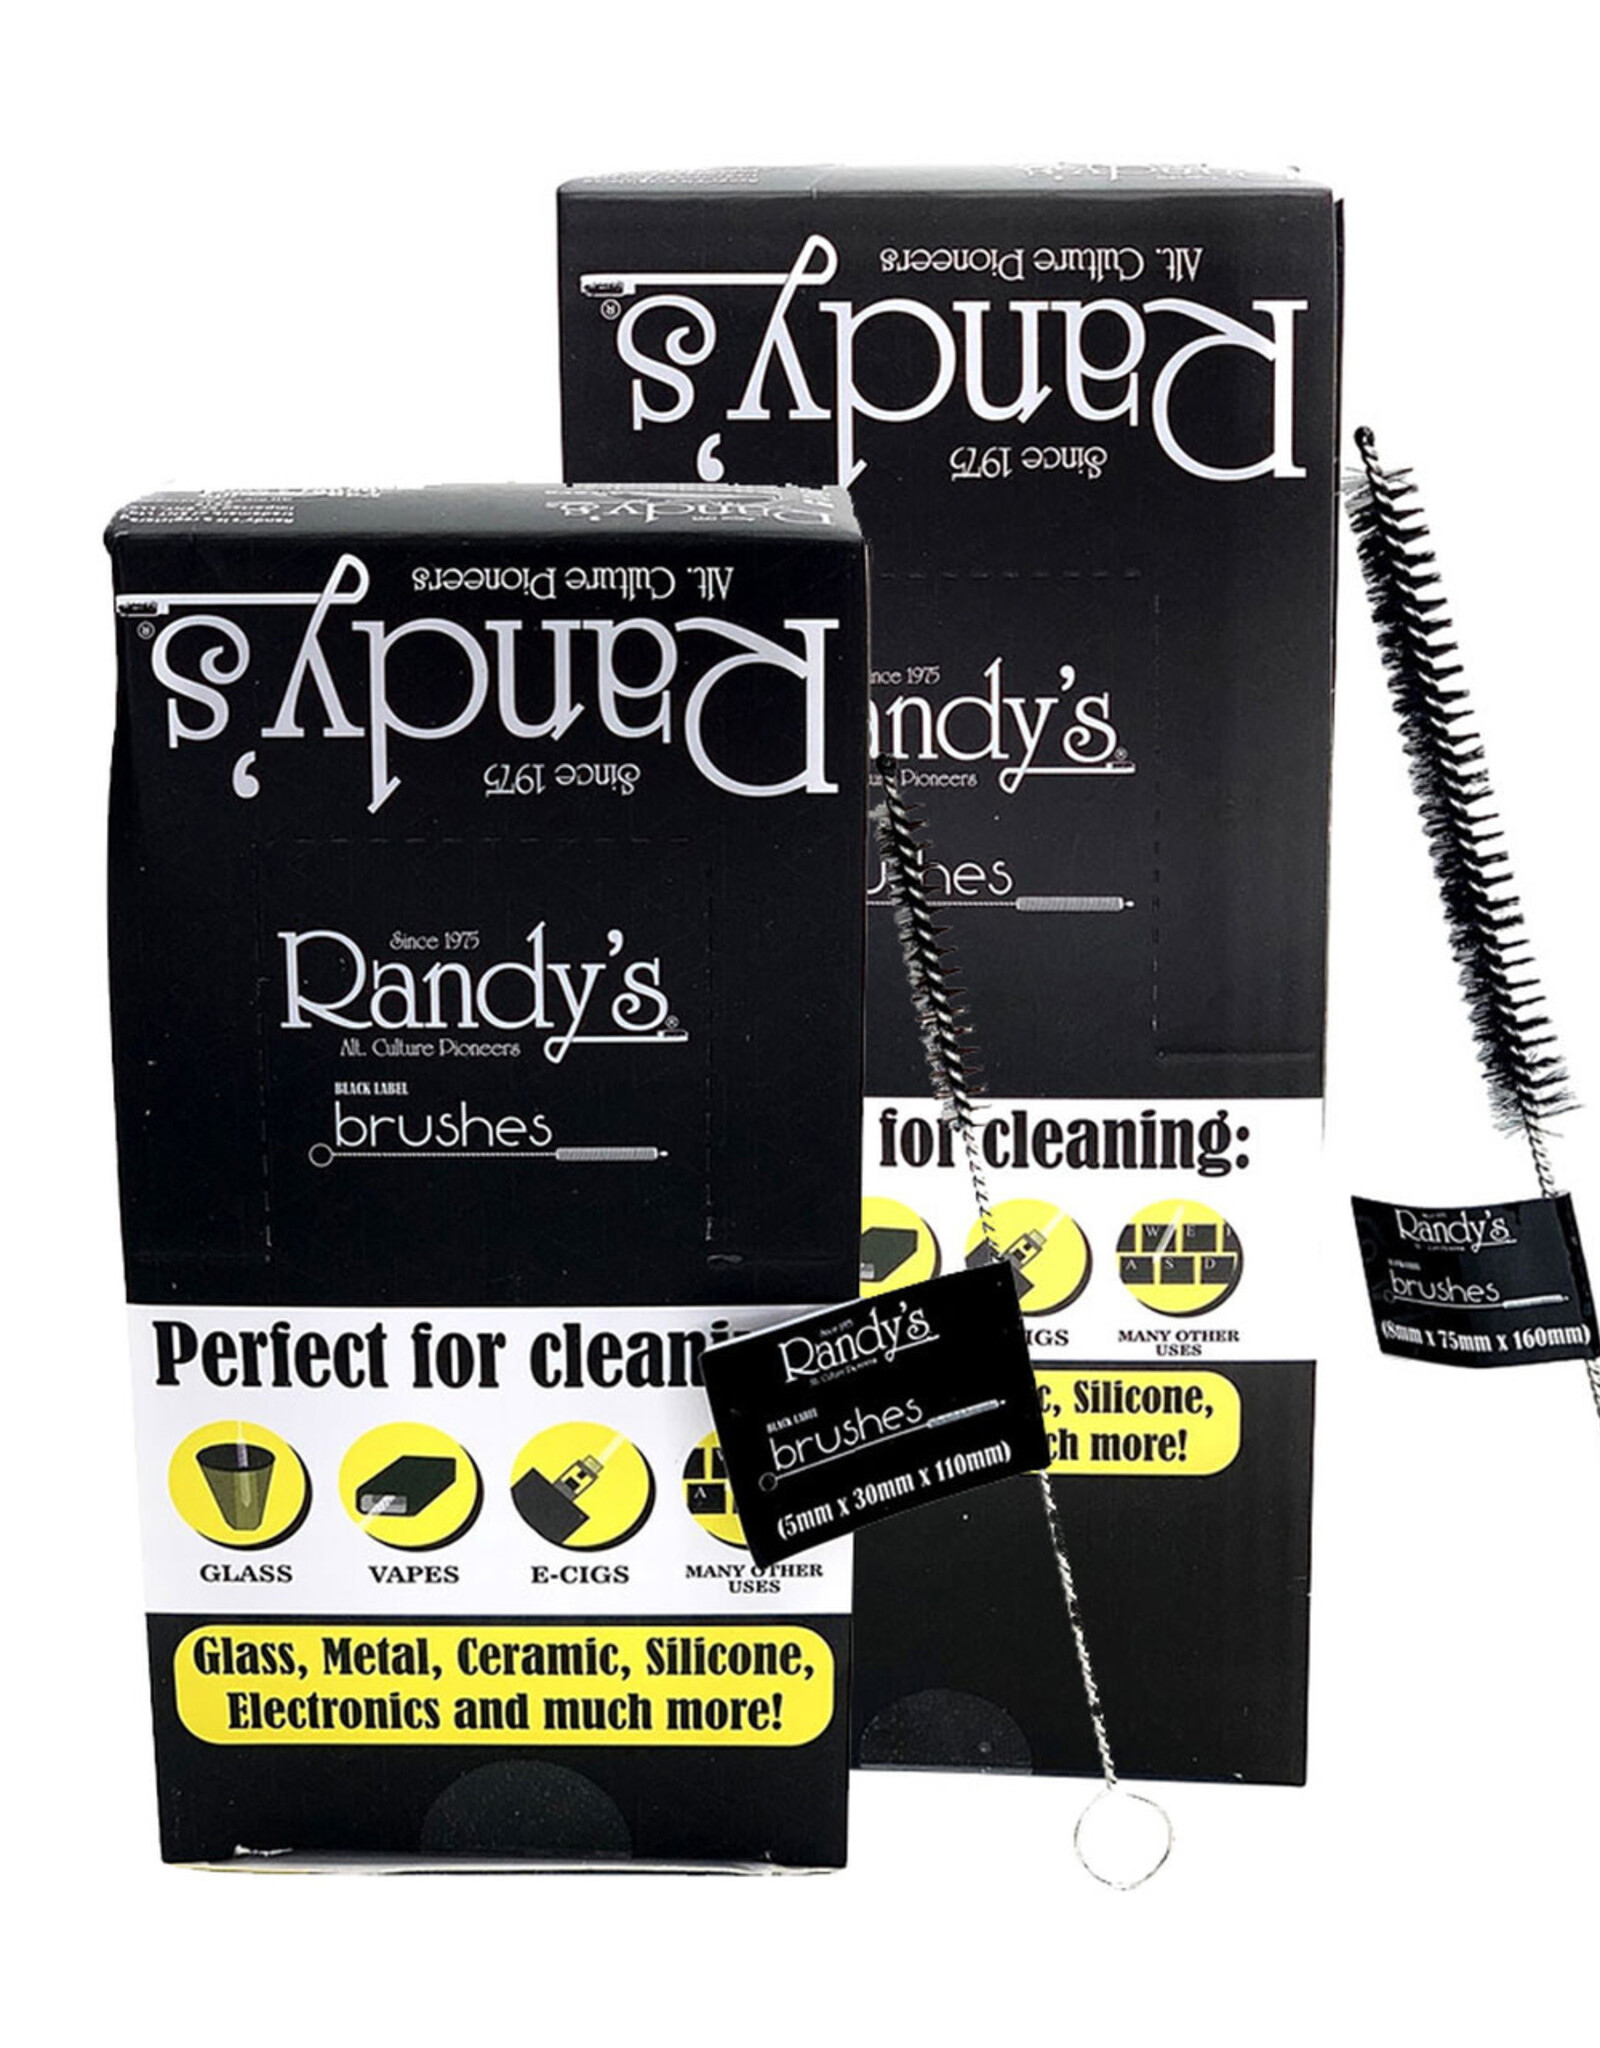 Randy's Randy's Cleaning Brush